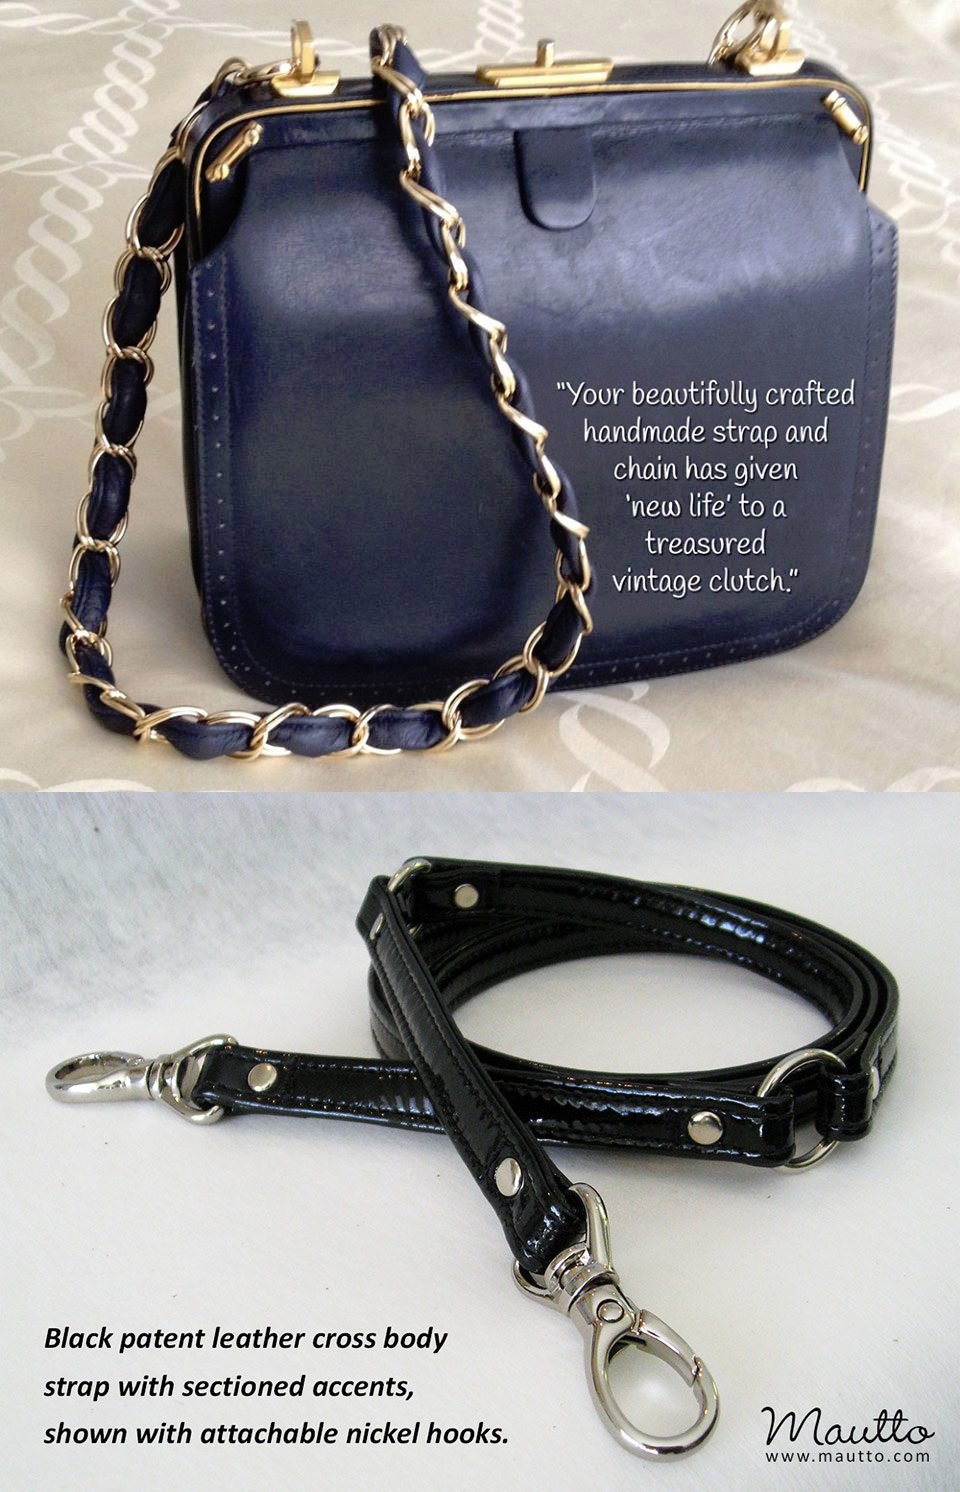 Custom Replacement Straps & Handles for Coach Purses / Handbags